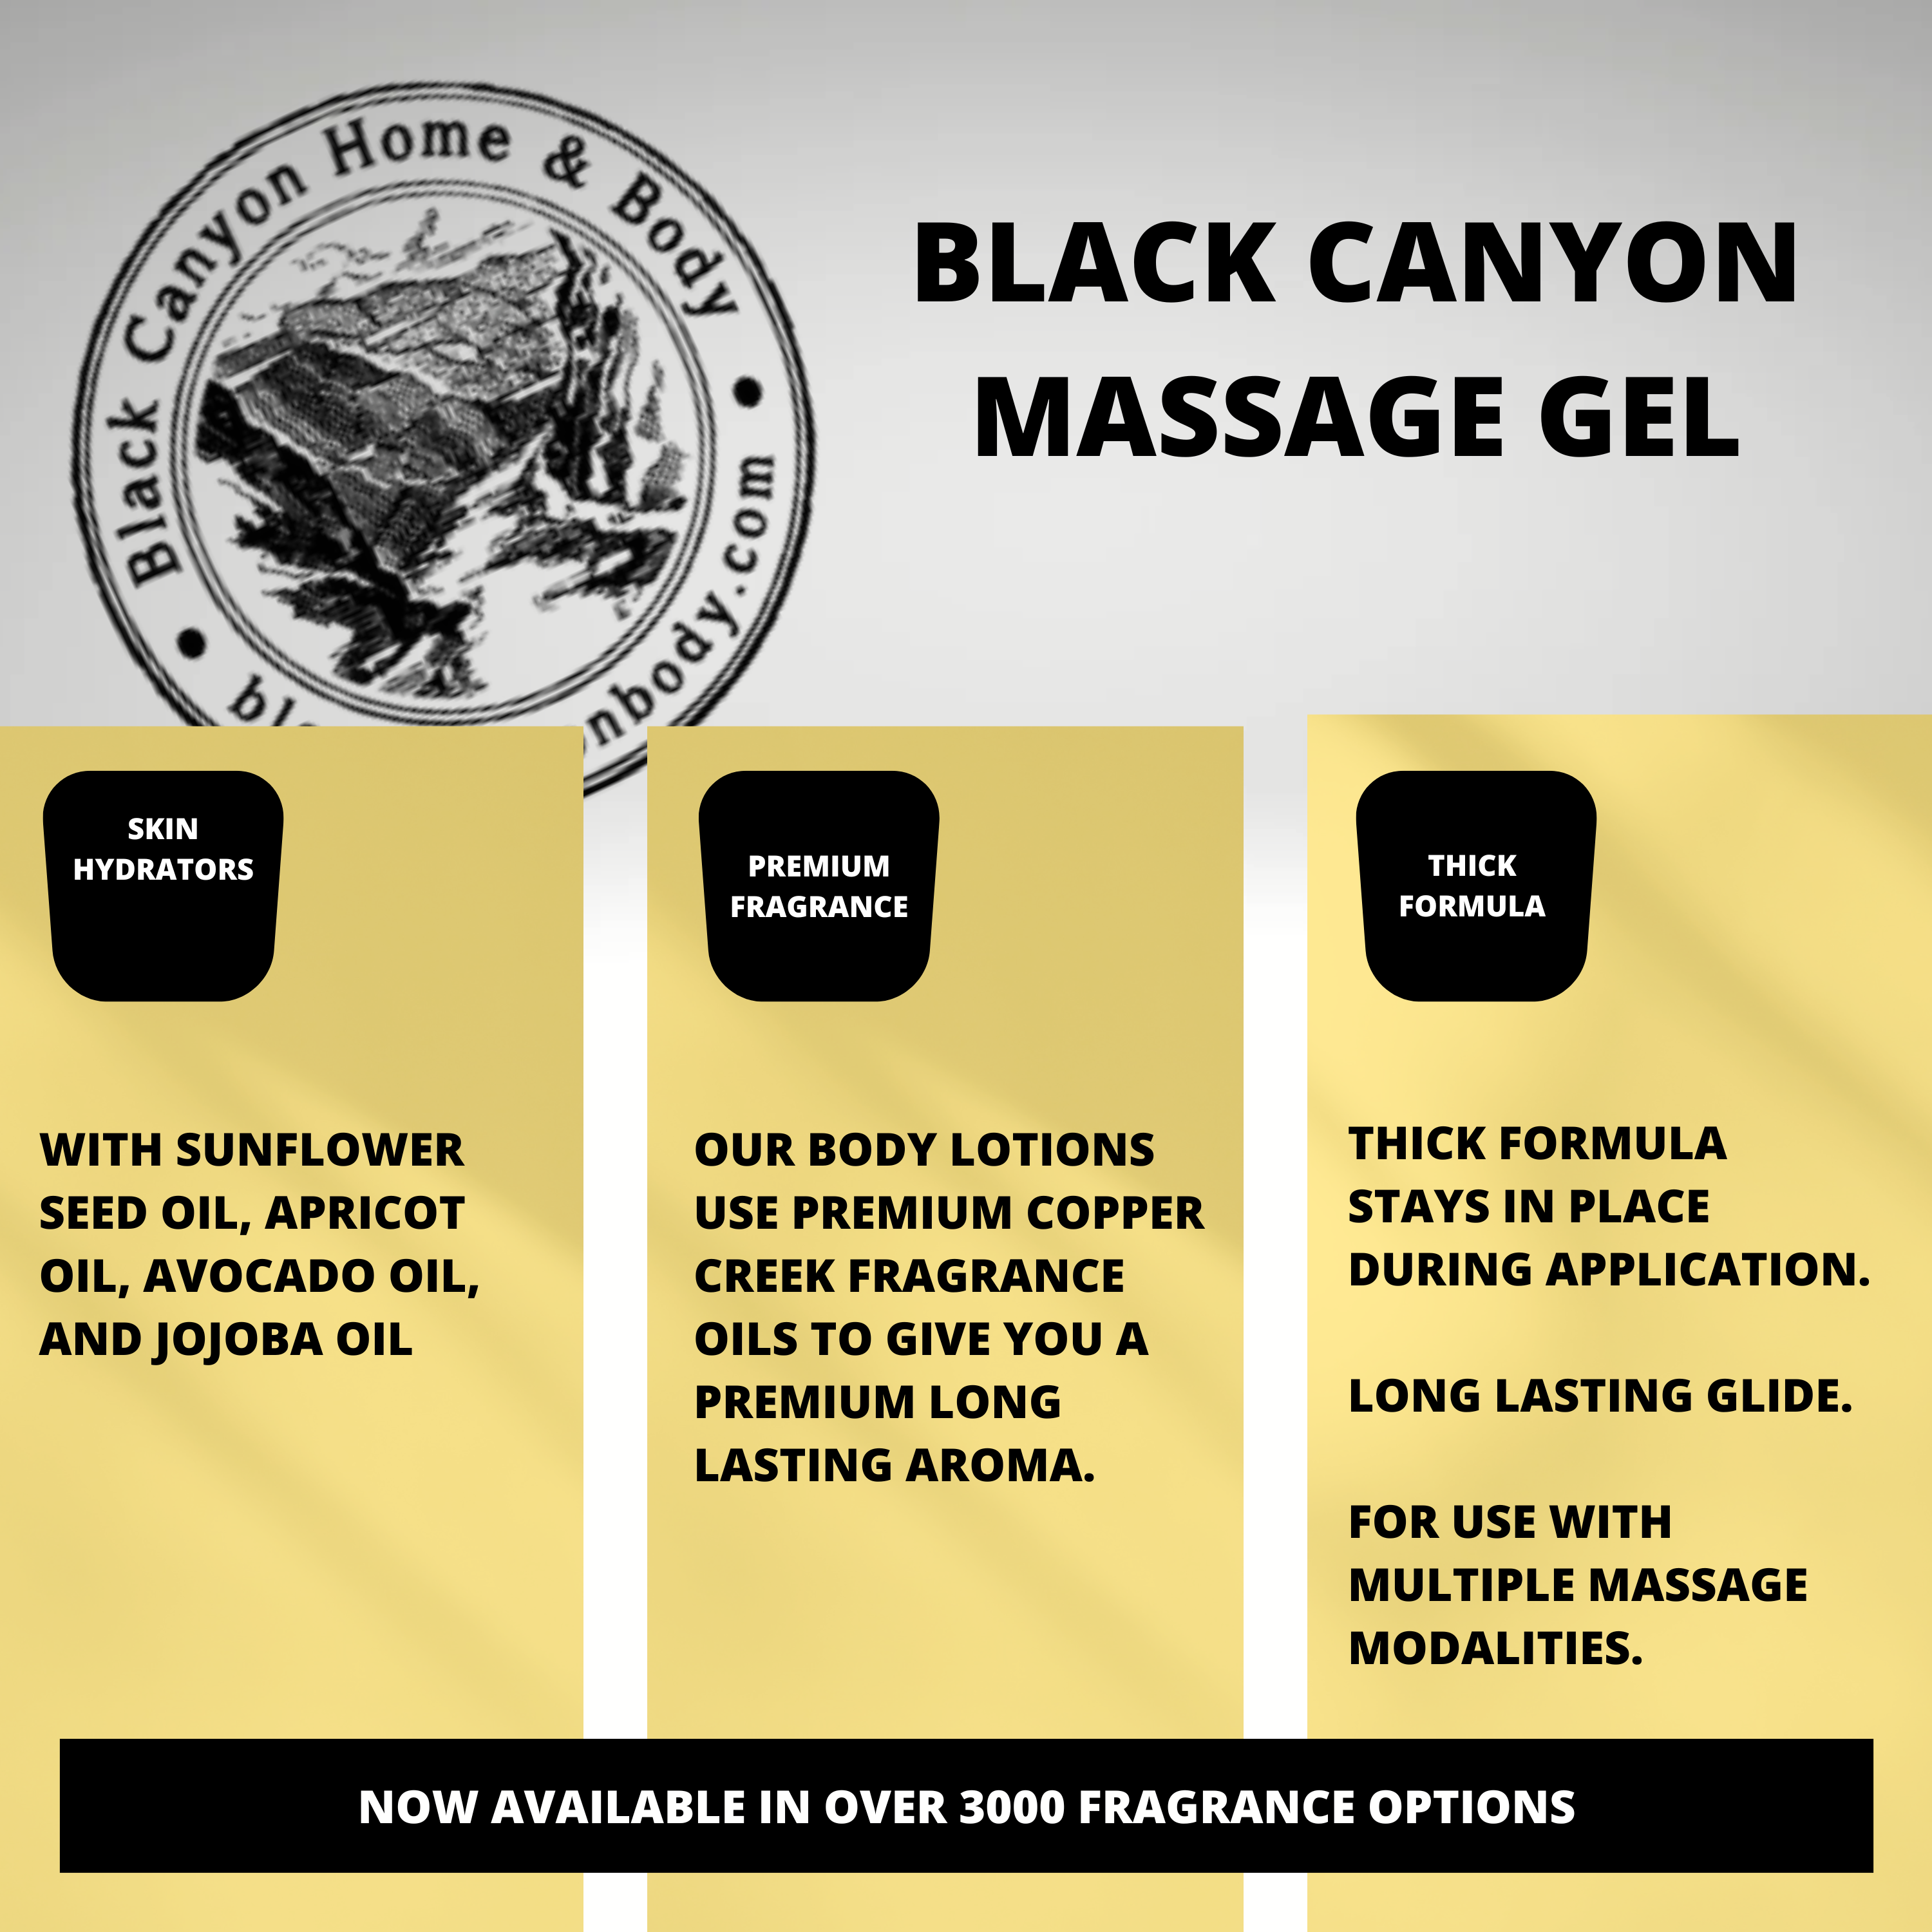 Black Canyon Cinnamon Sugar Cookie Scented Massage Gel